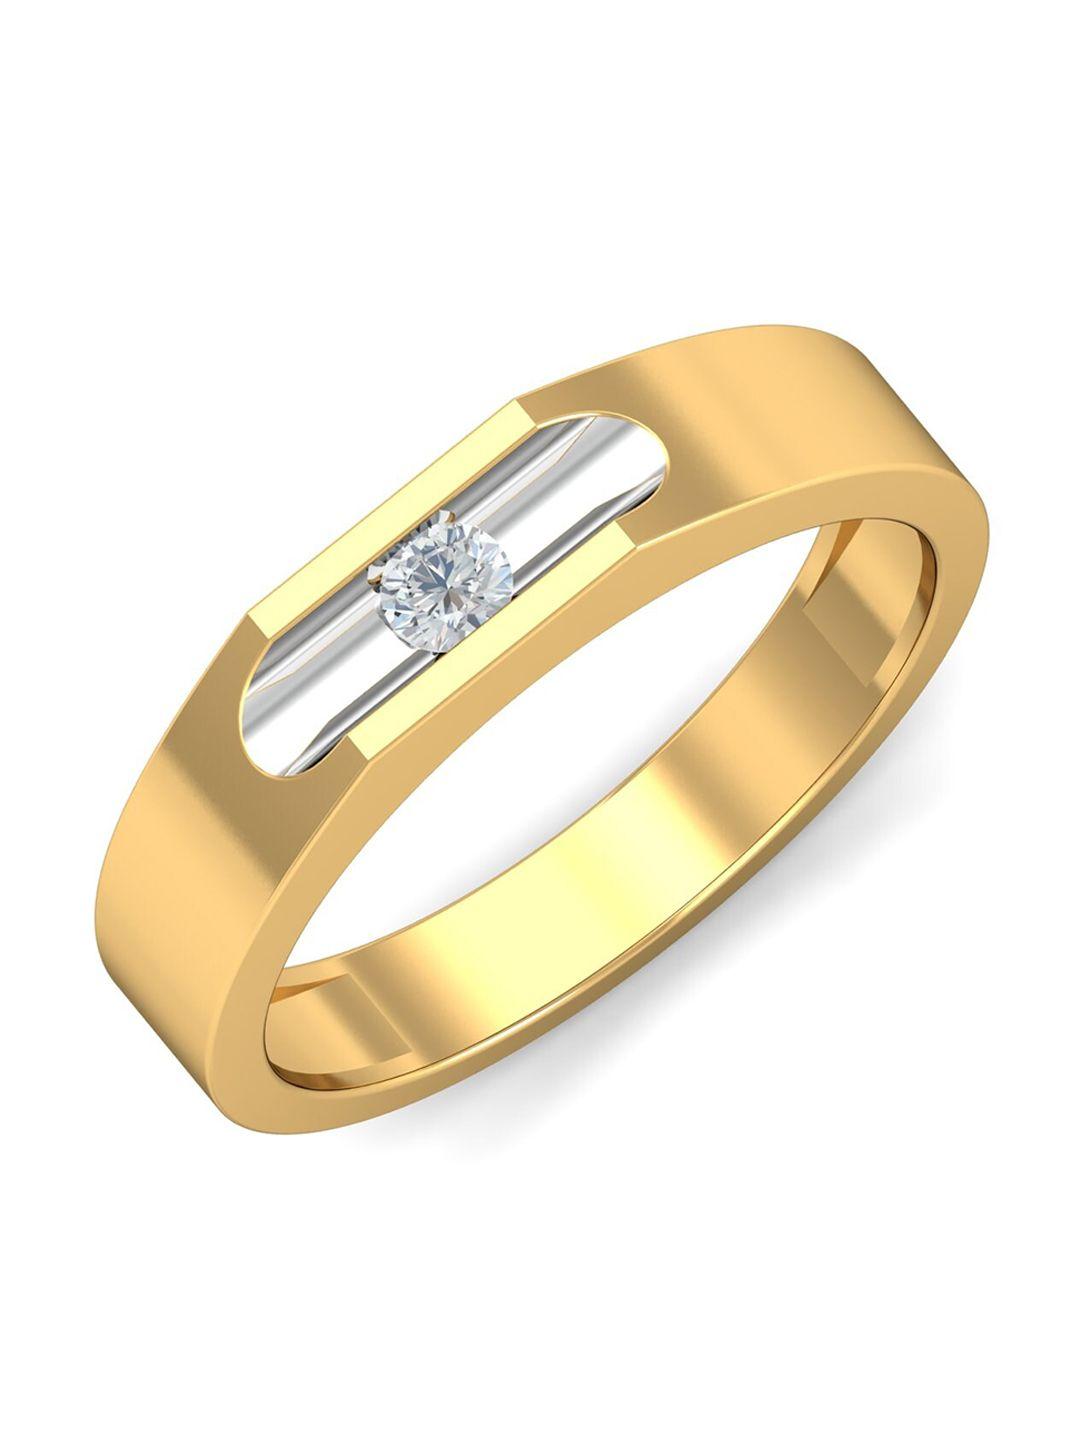 kuberbox-zuza-men-18kt-gold-diamond-studded-ring--5.15-gm